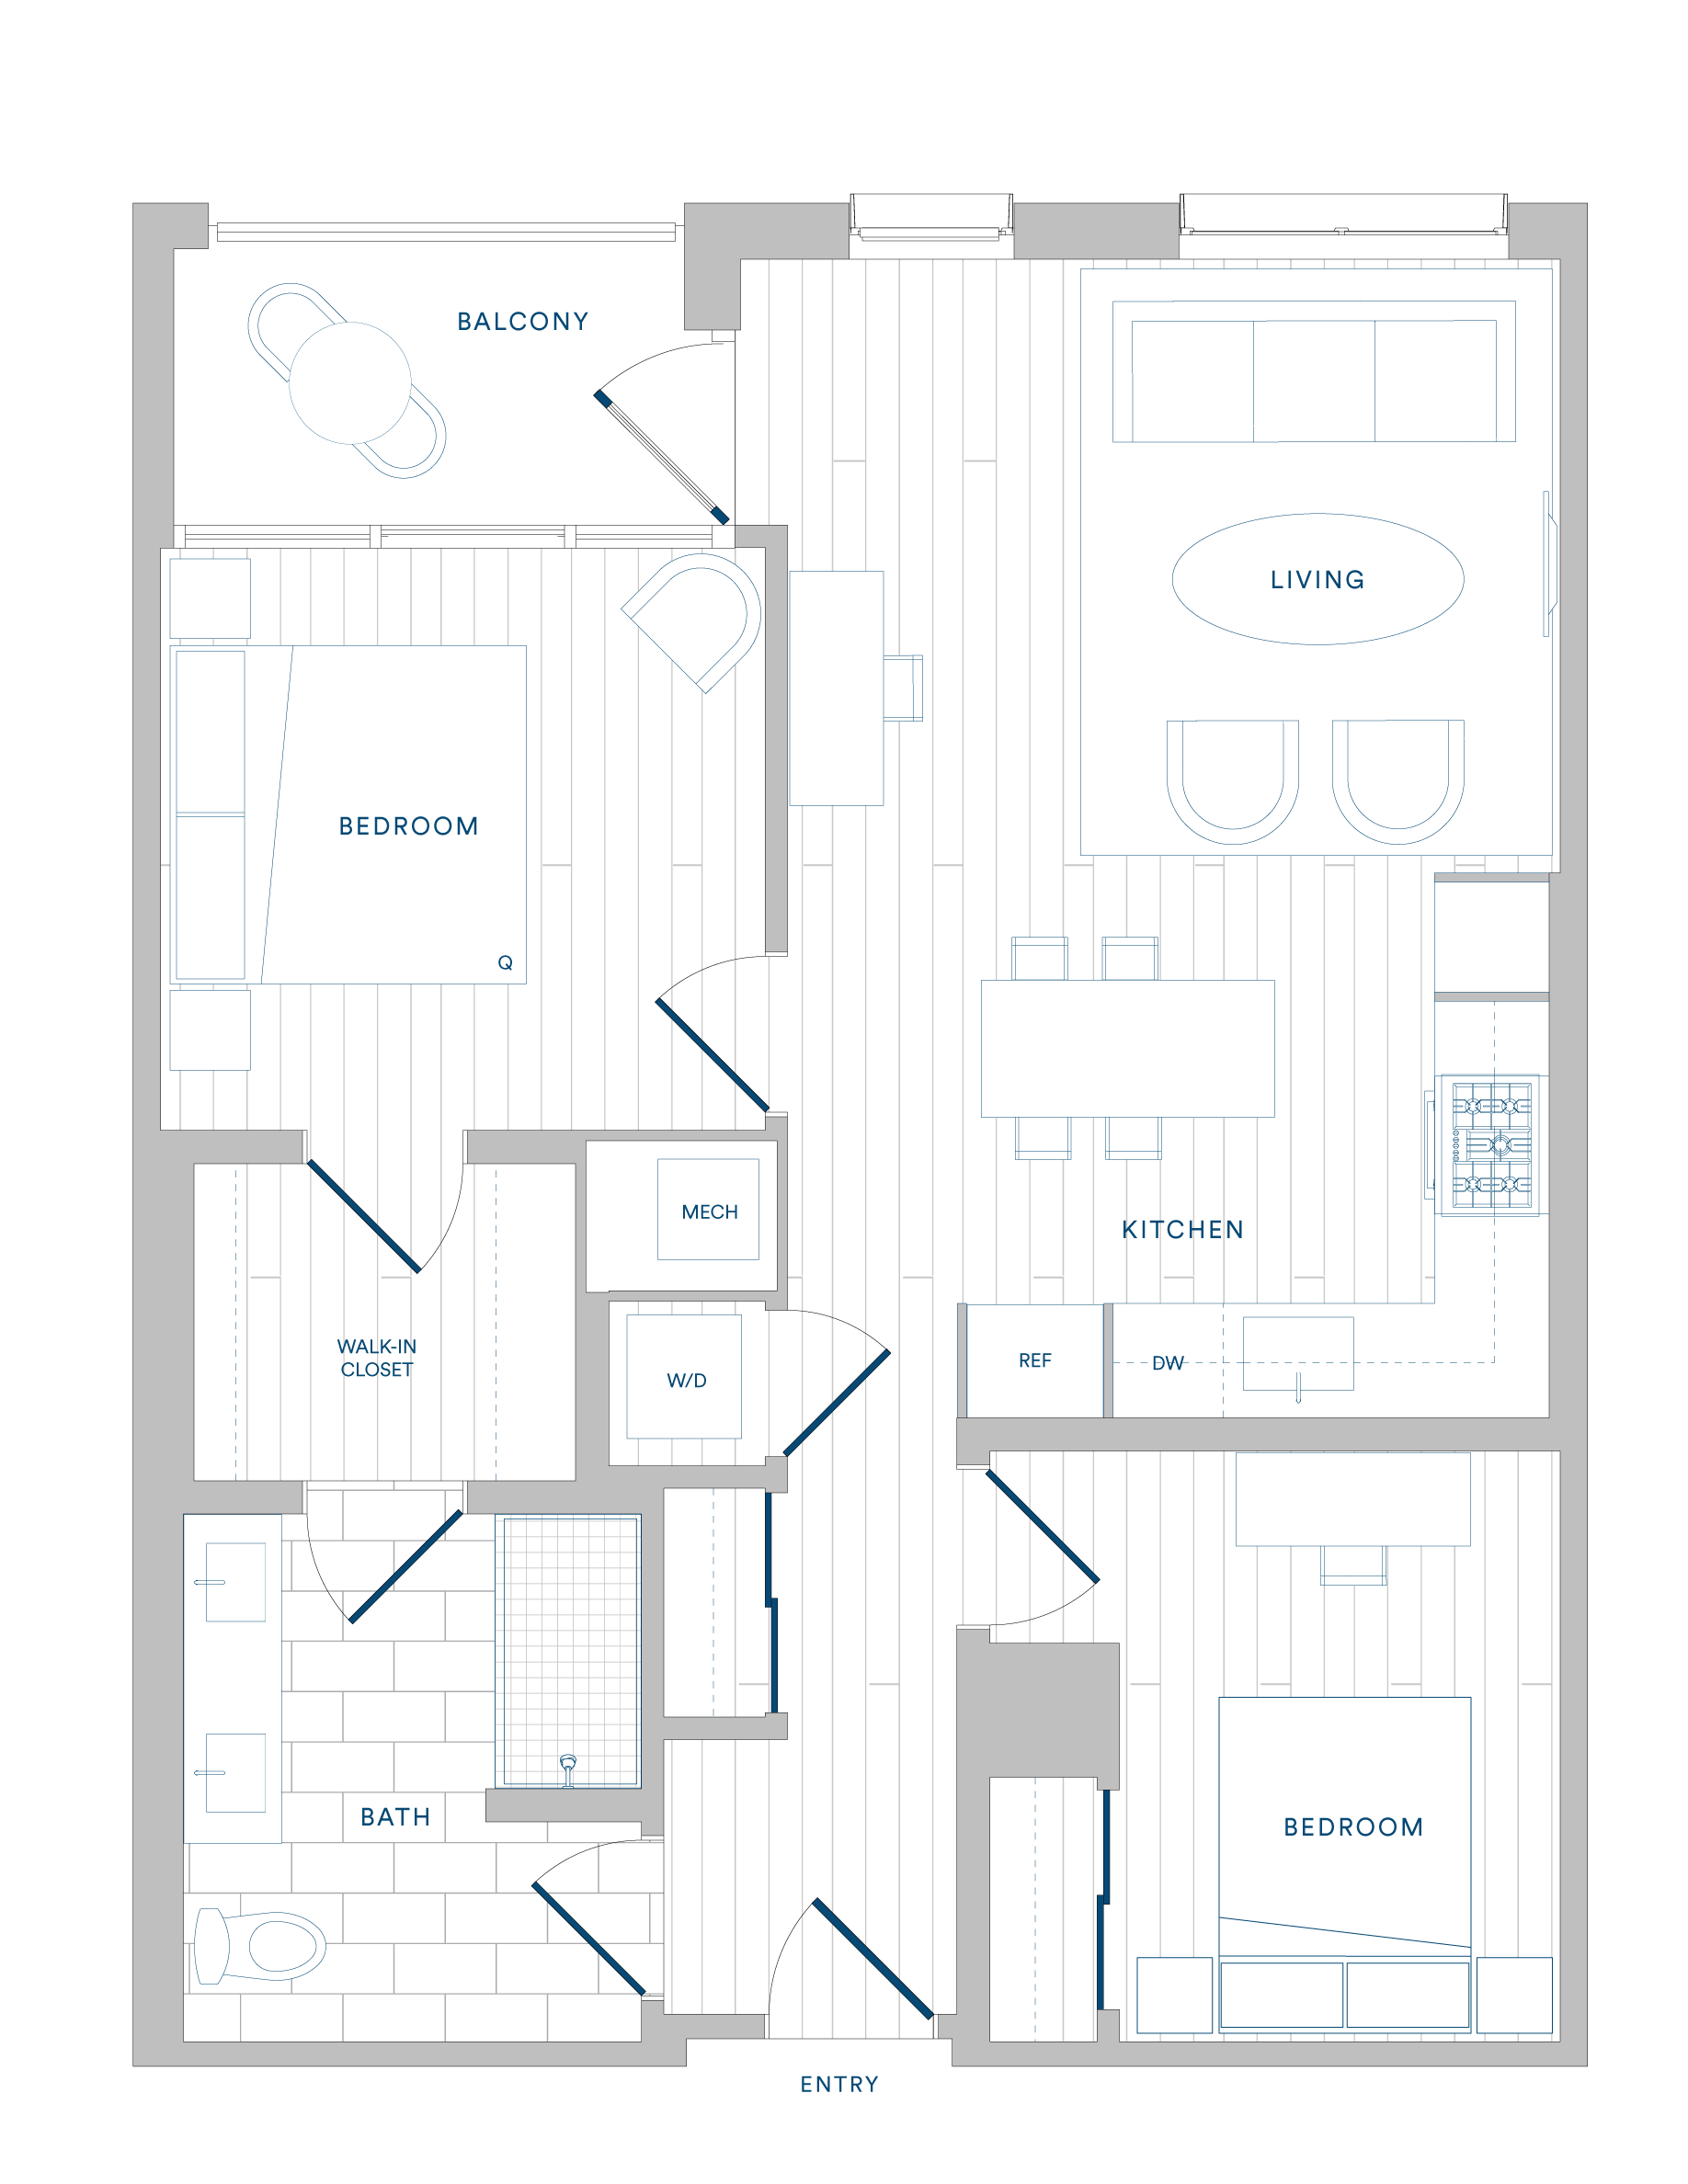 Floorplan for Apartment #313, 2 bedroom unit at Margarite